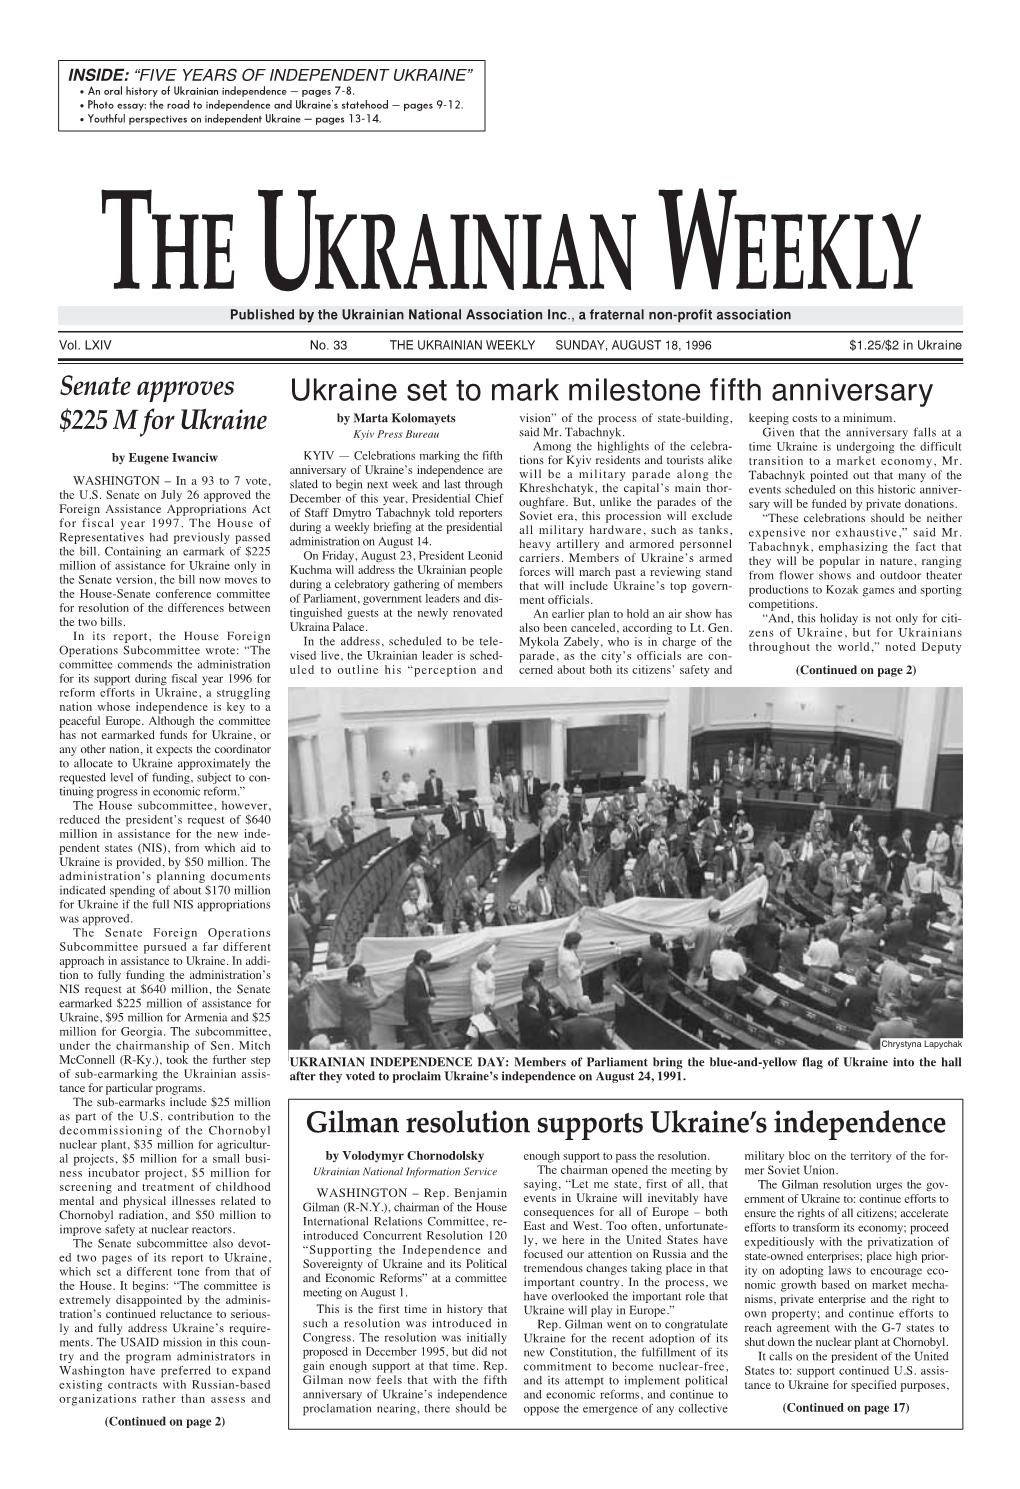 The Ukrainian Weekly 1996, No.33